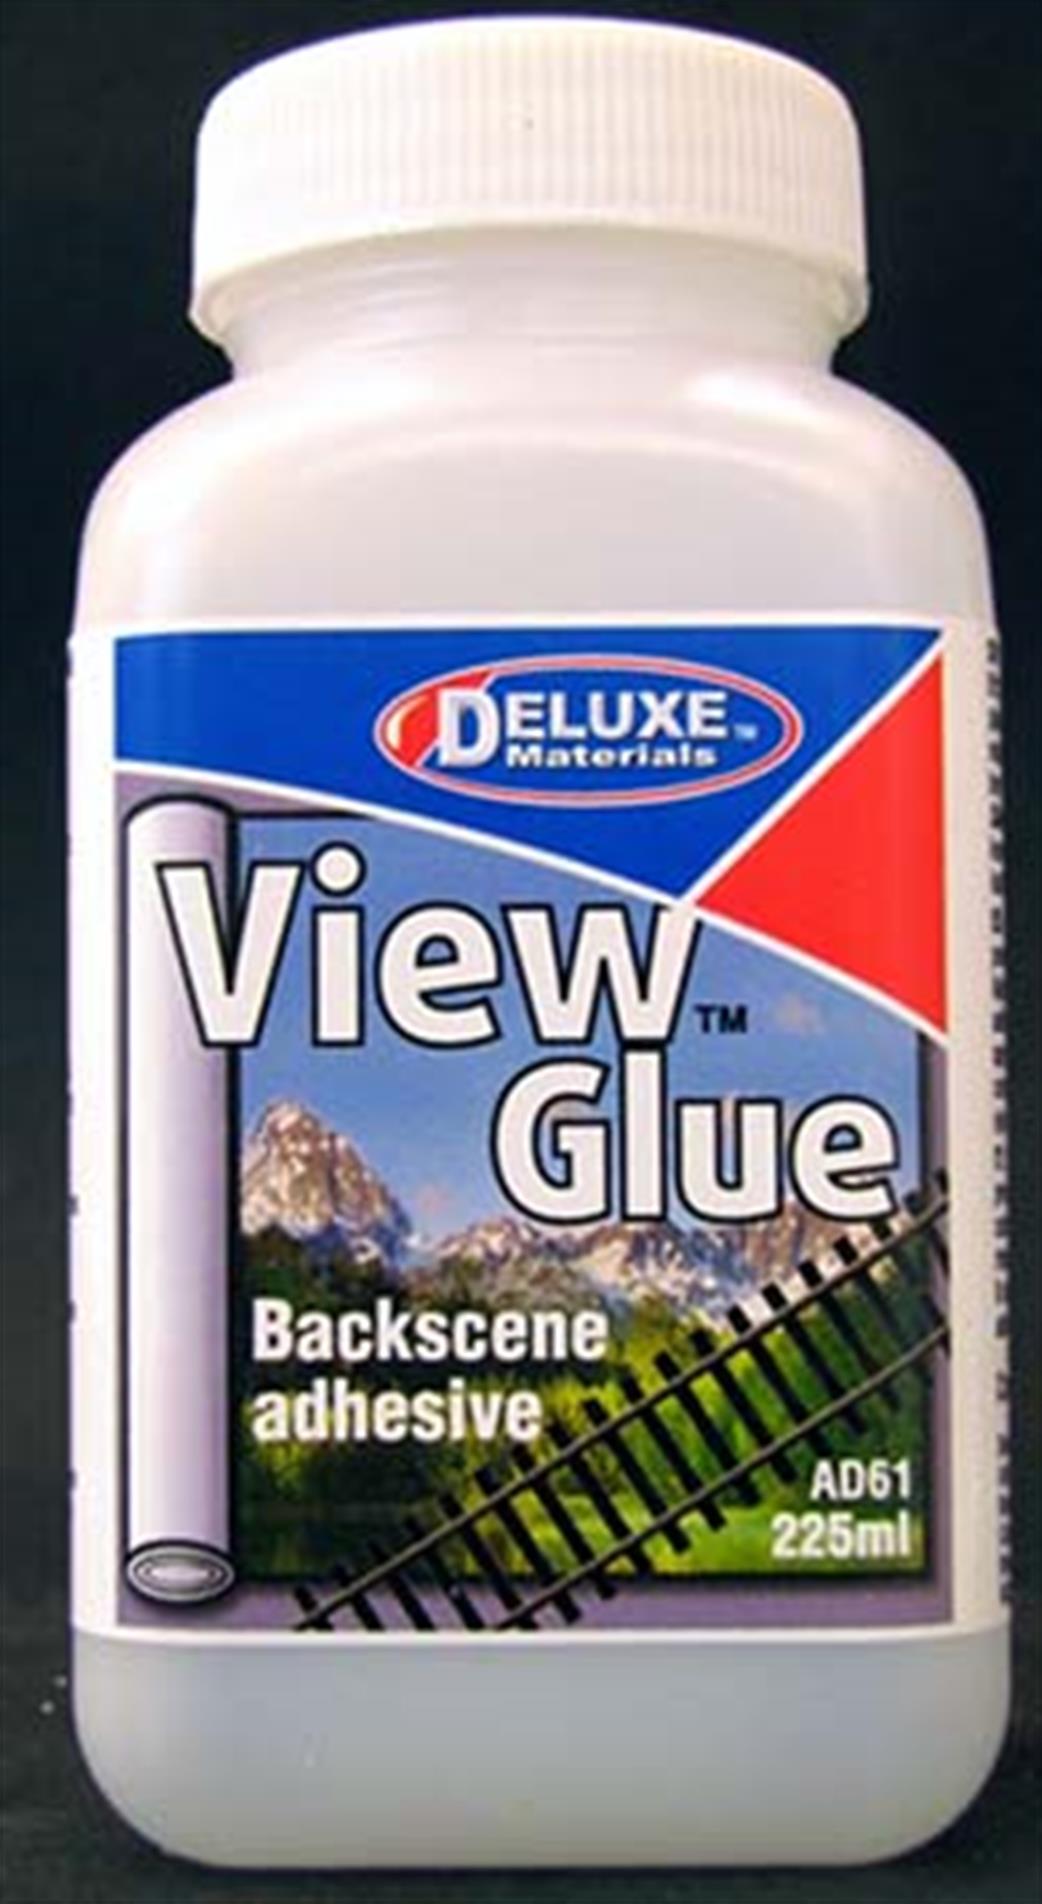 Deluxe Materials AD61 View Glue Backscene Adhesive